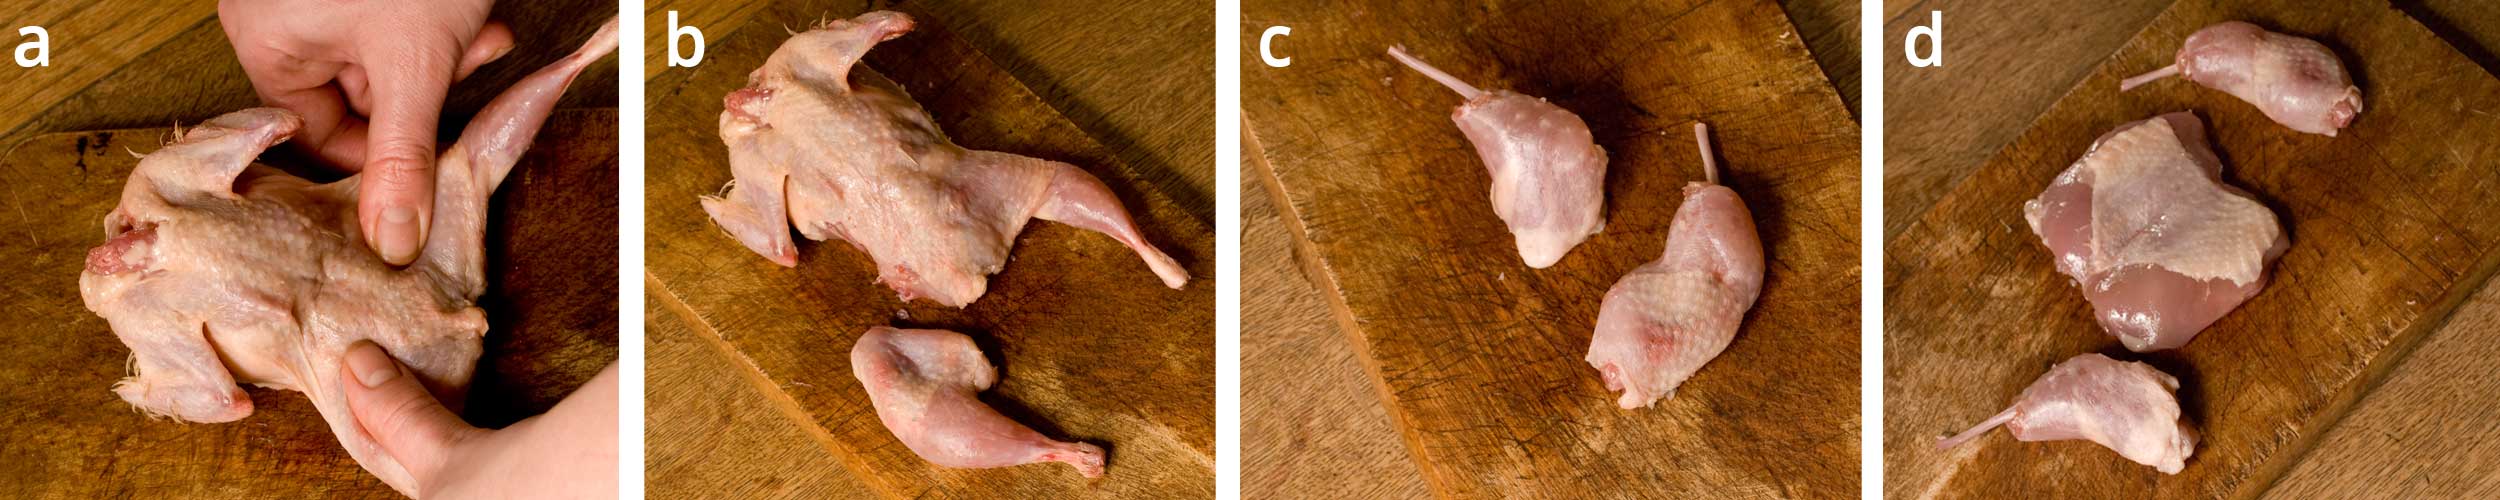 Game recipe - Butchery steps for quail